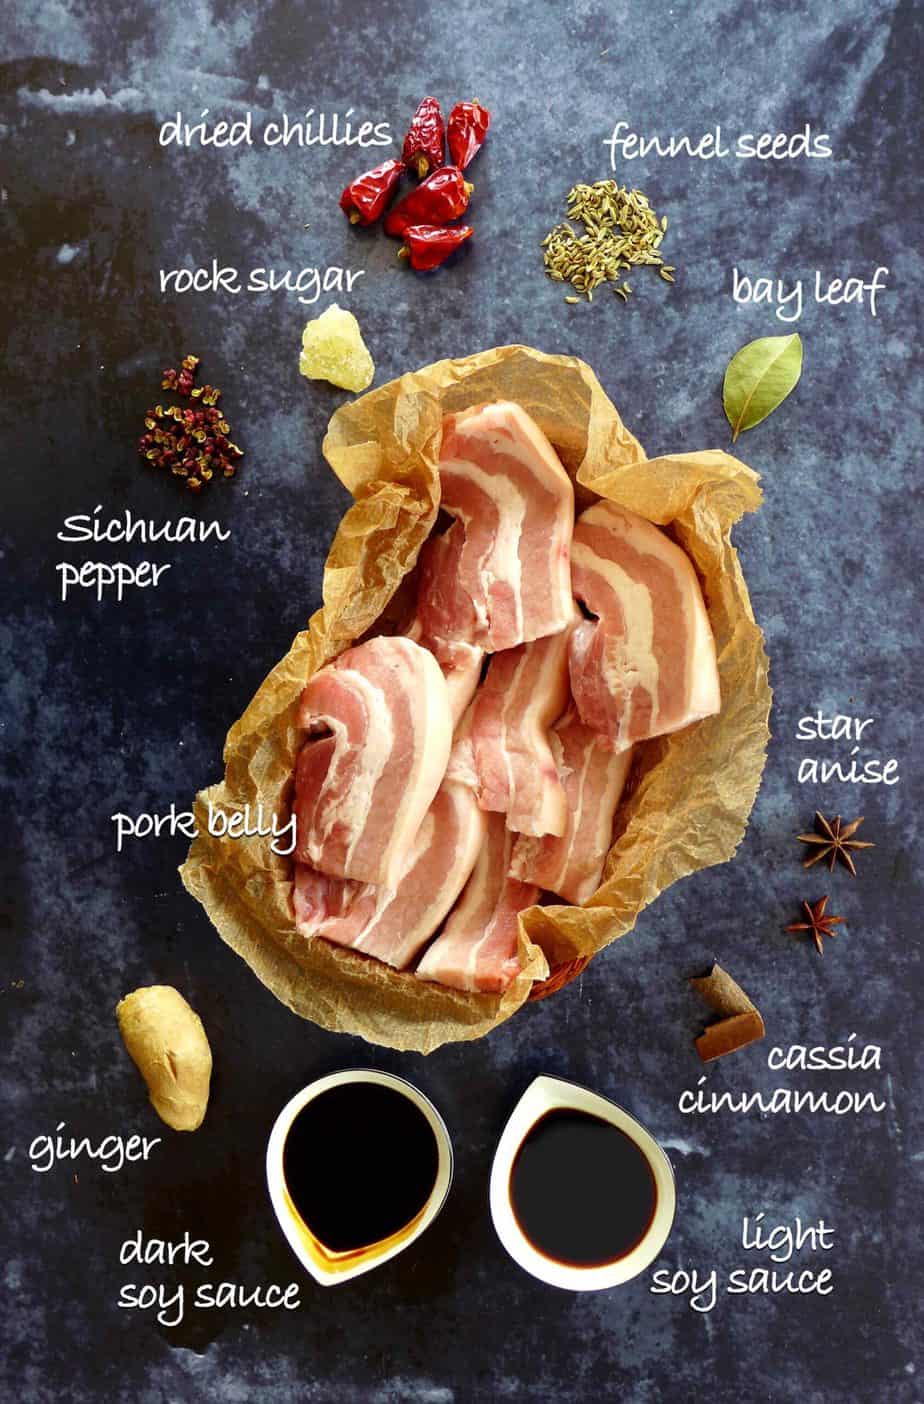 Ingredients for braising pork belly